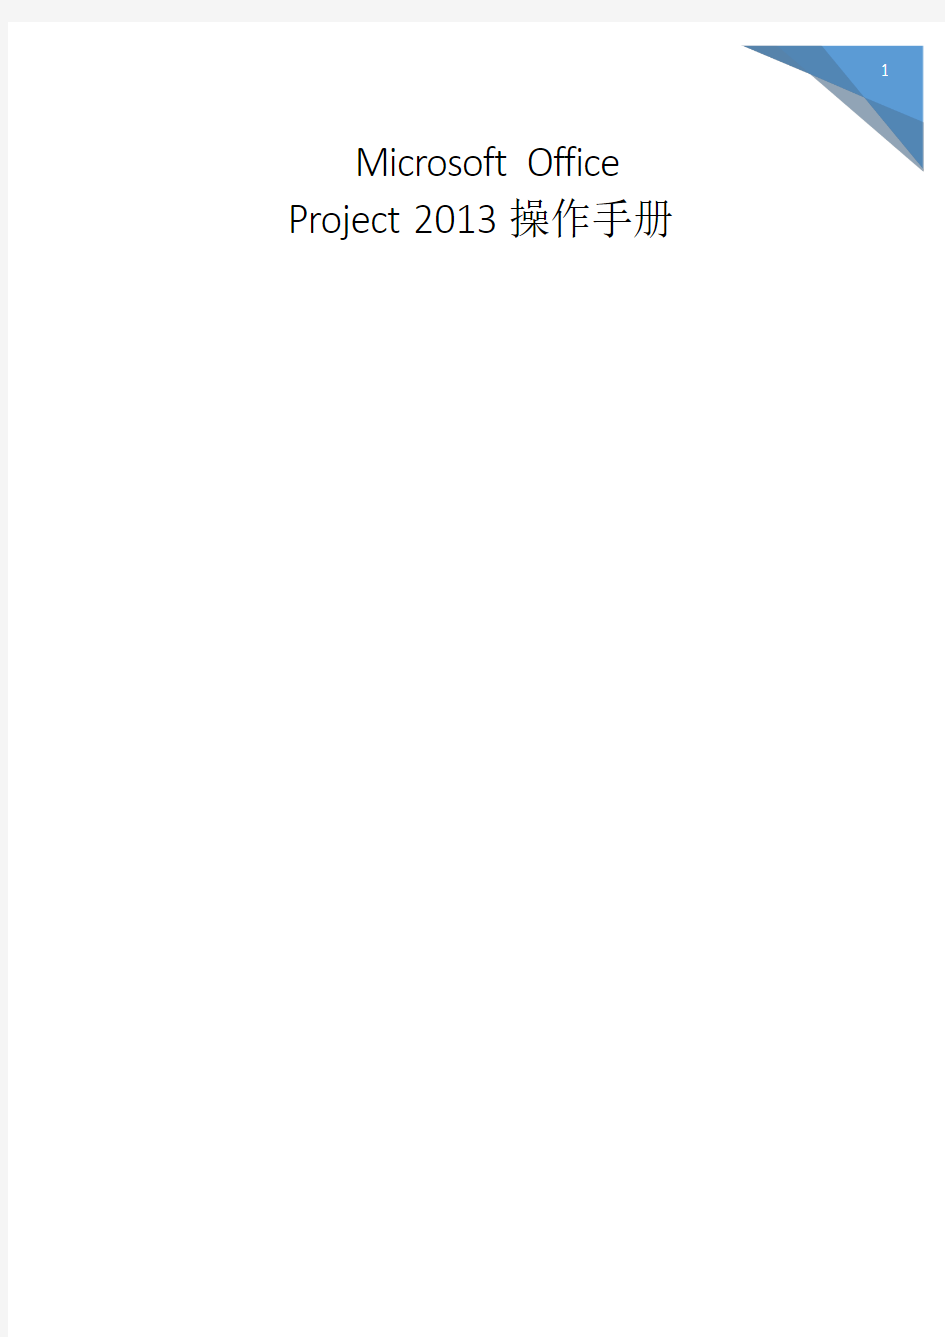 Microsoft Project 2013操作手册